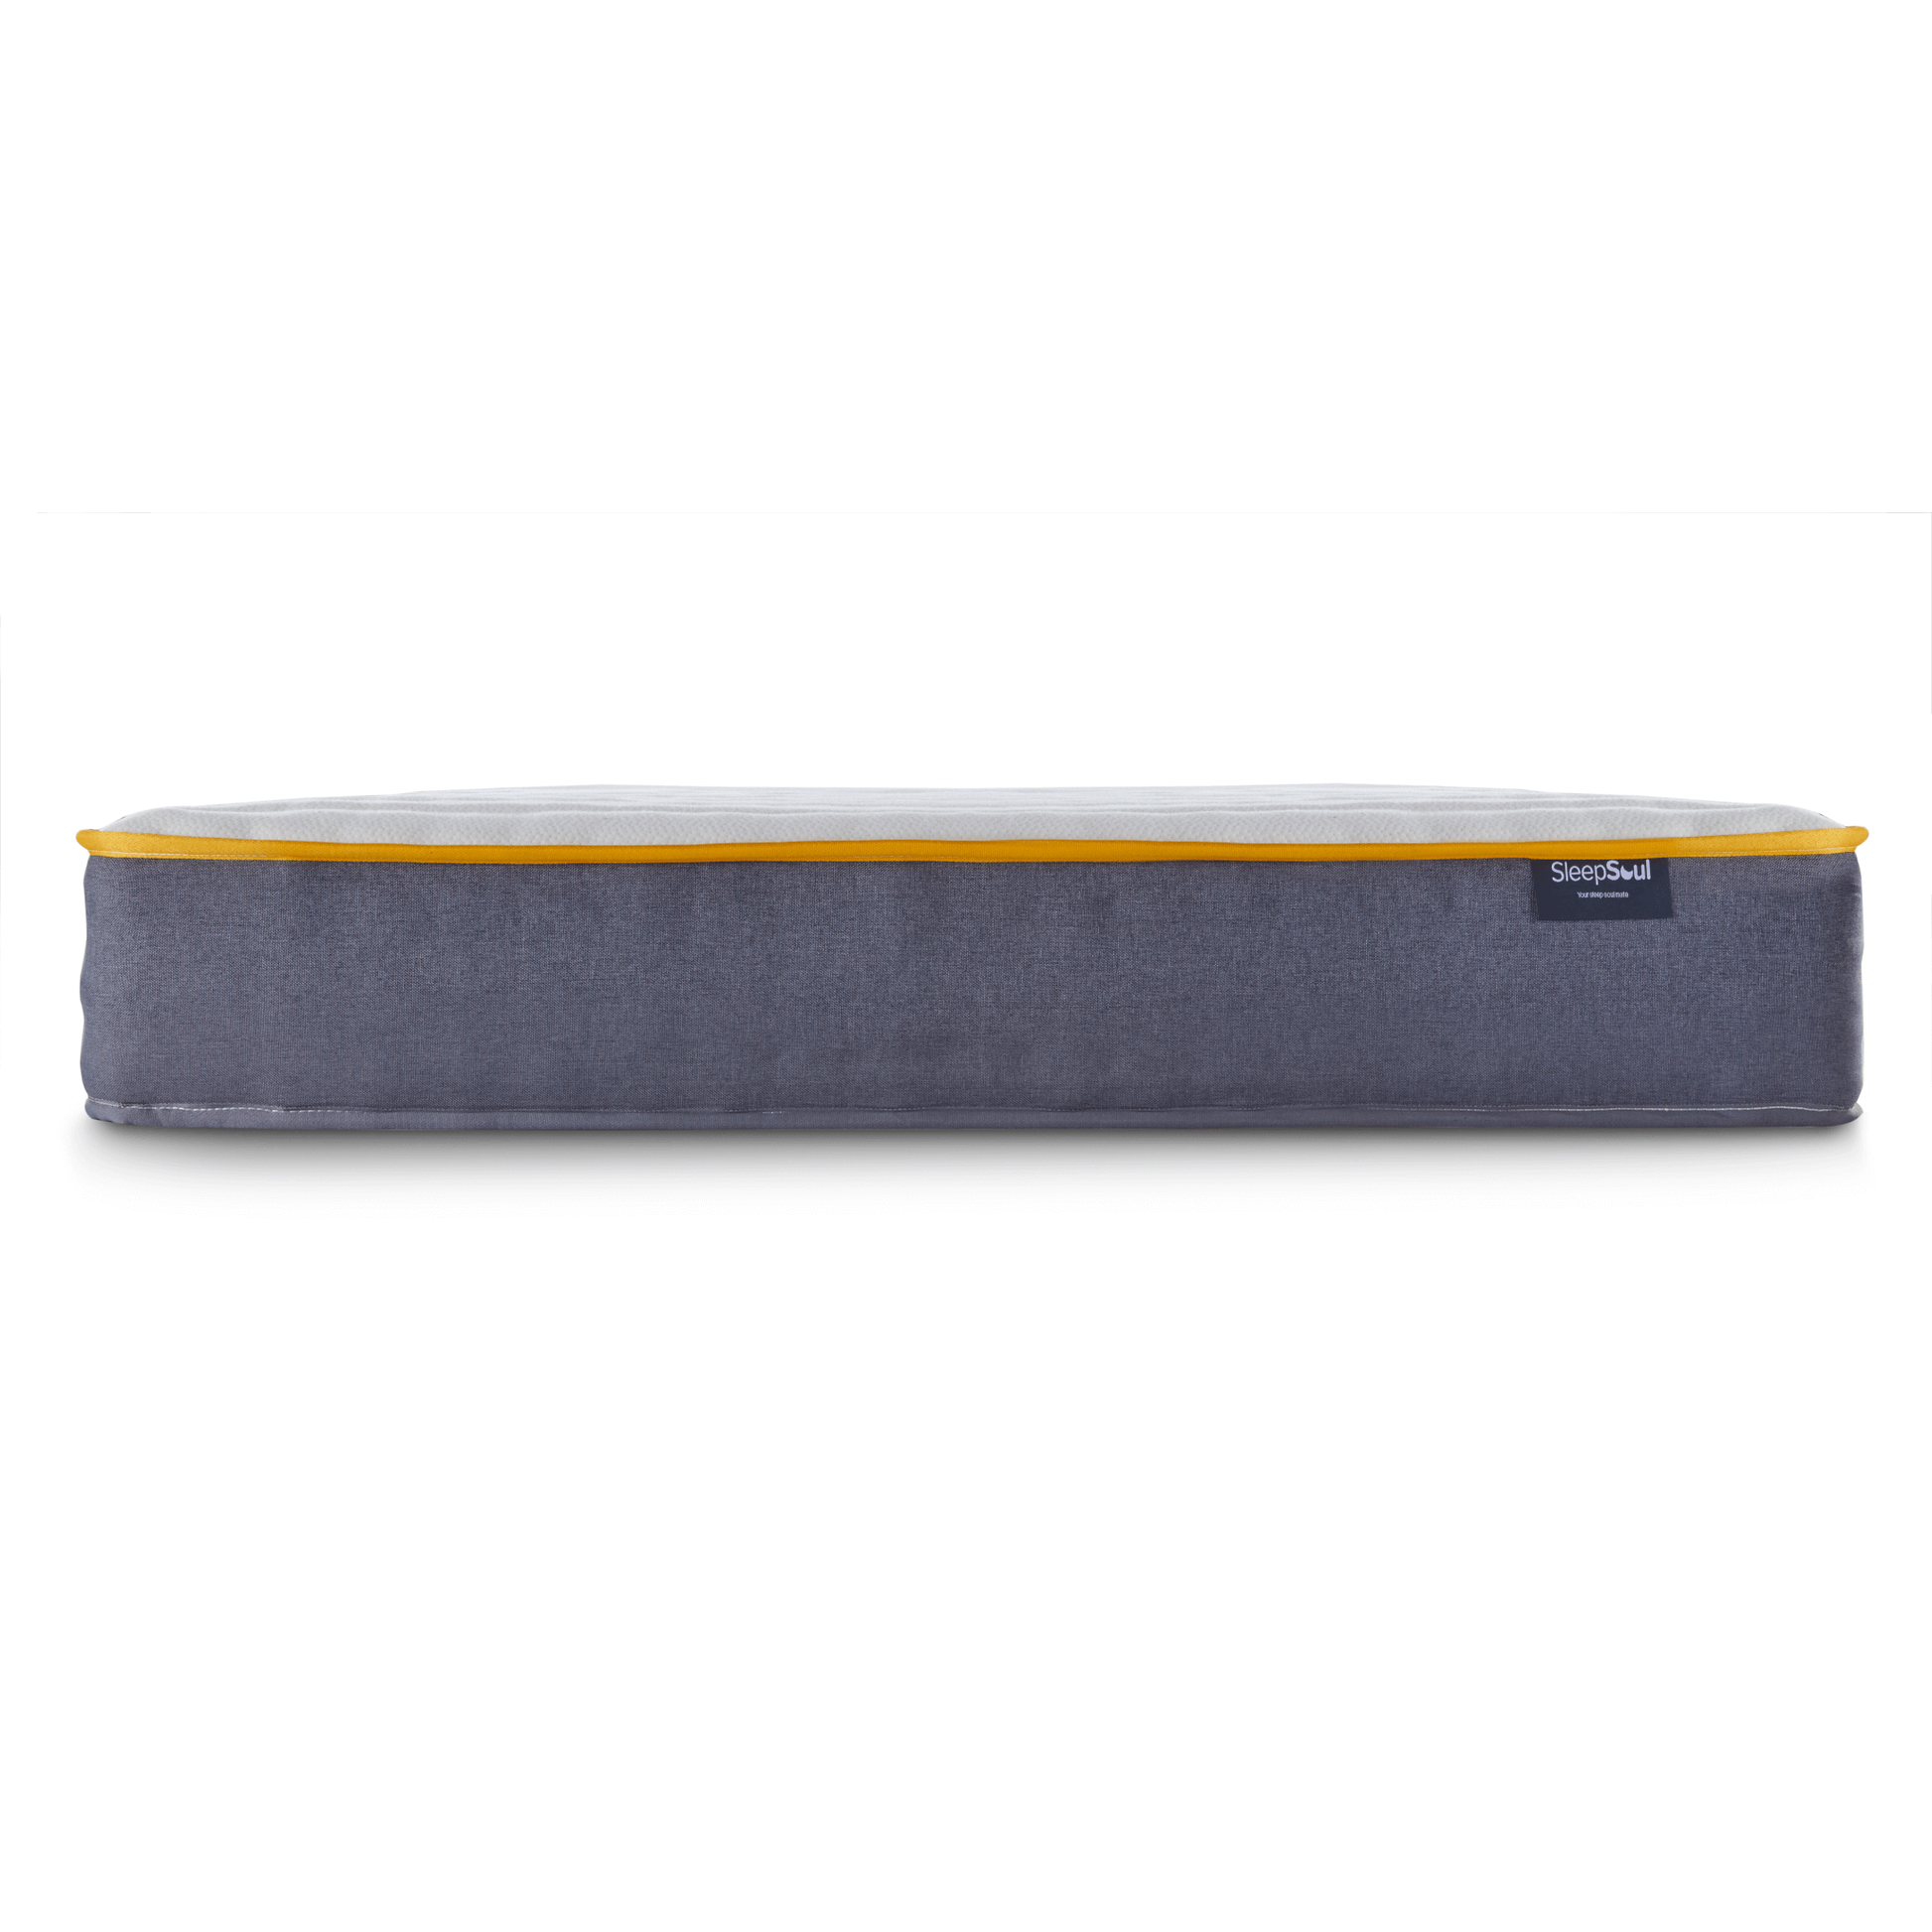 SleepSoul comfort 800 pocket spring standard single mattress end